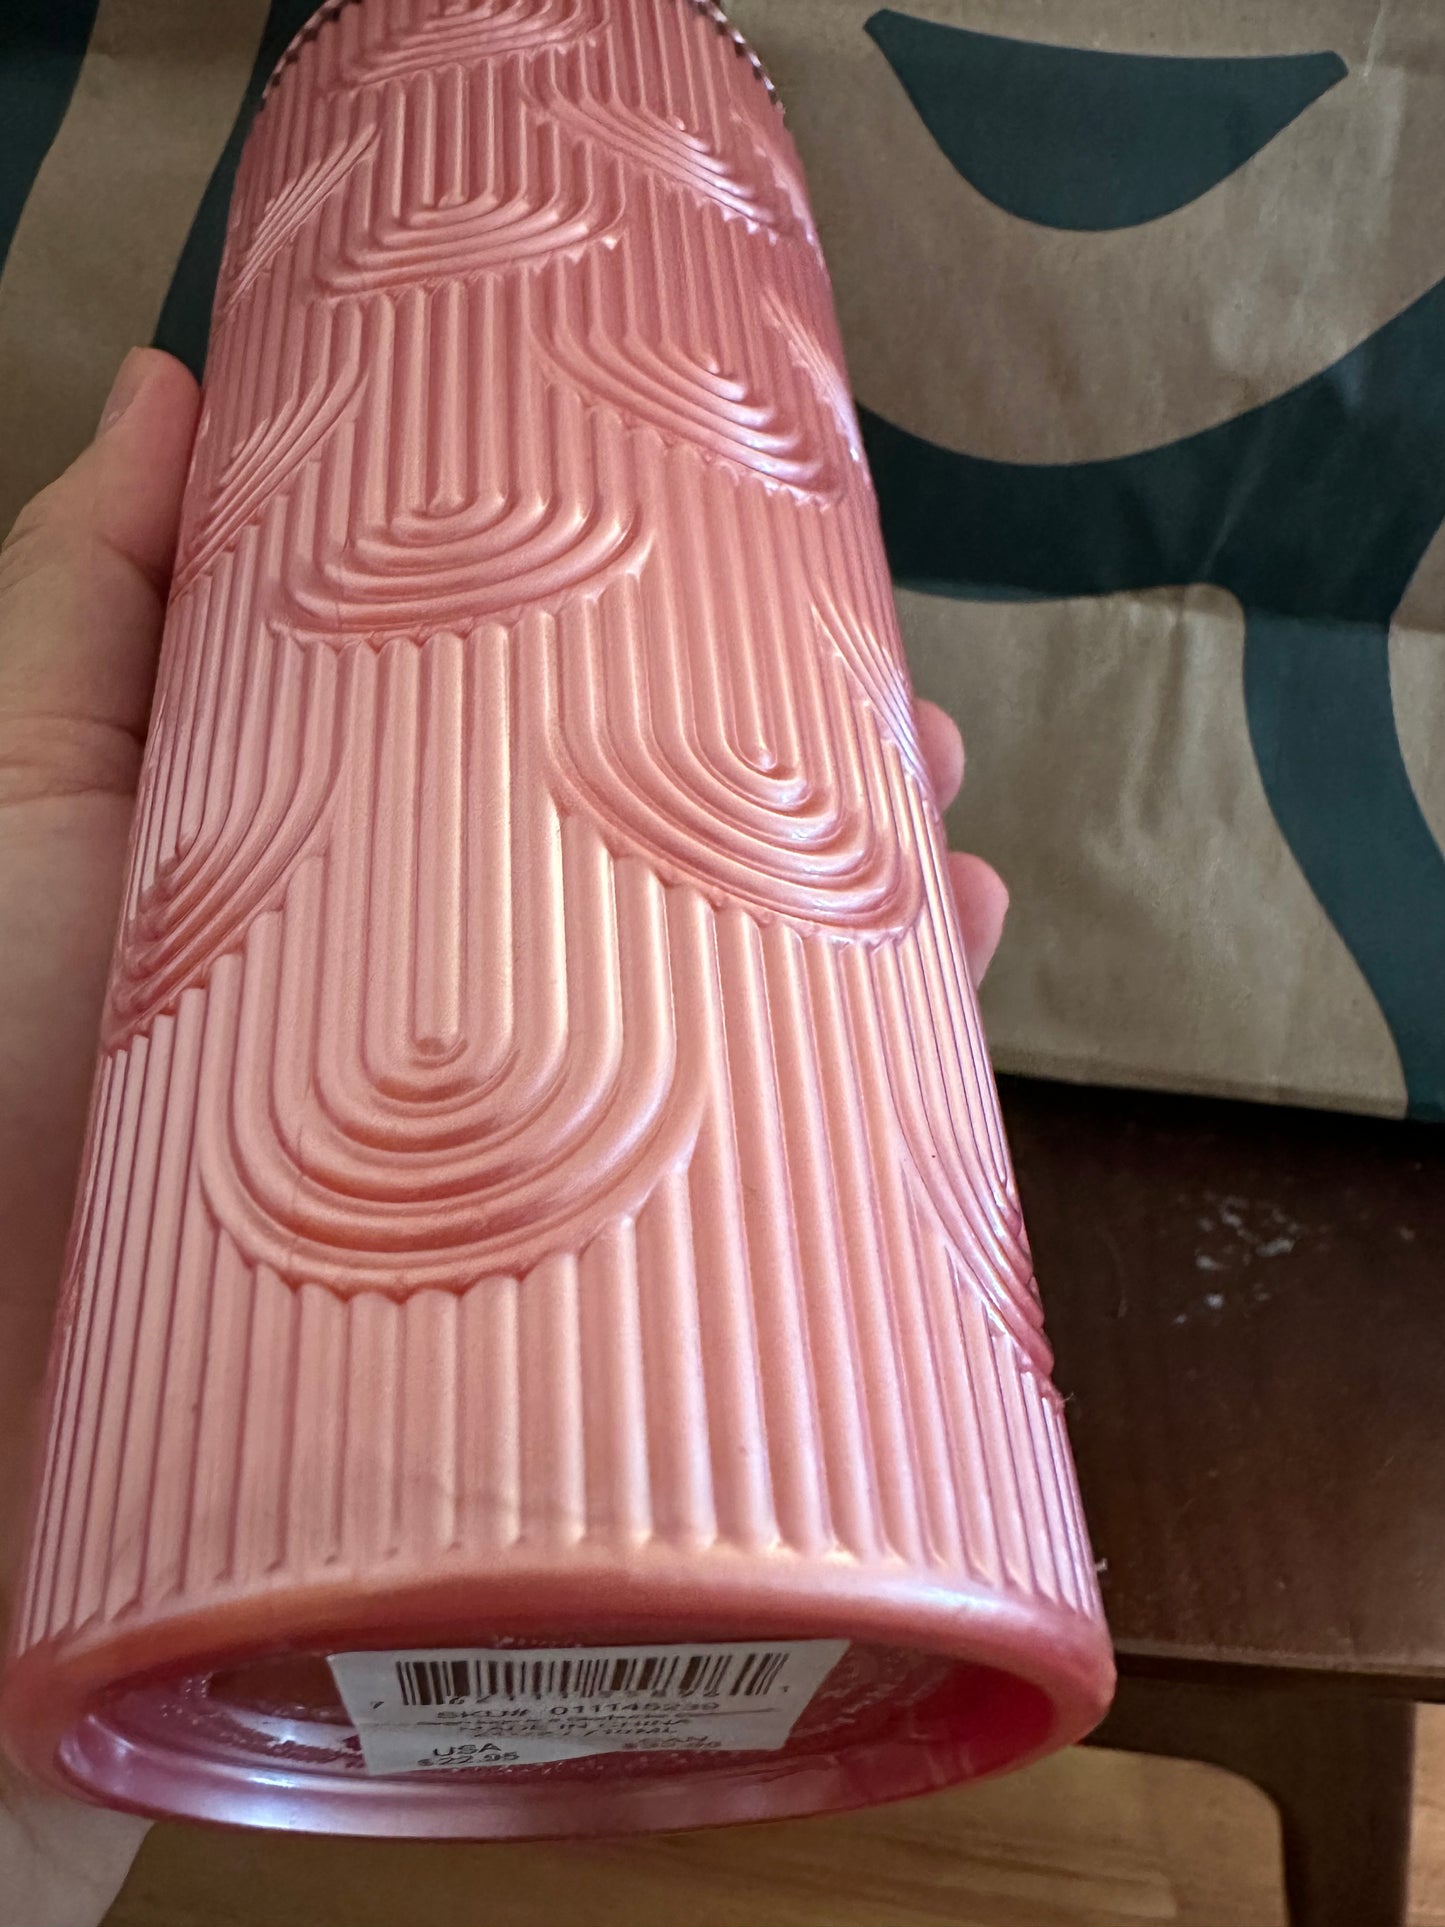 Starbucks Tumbler Pink Mermaid Scale - Venti 24oz